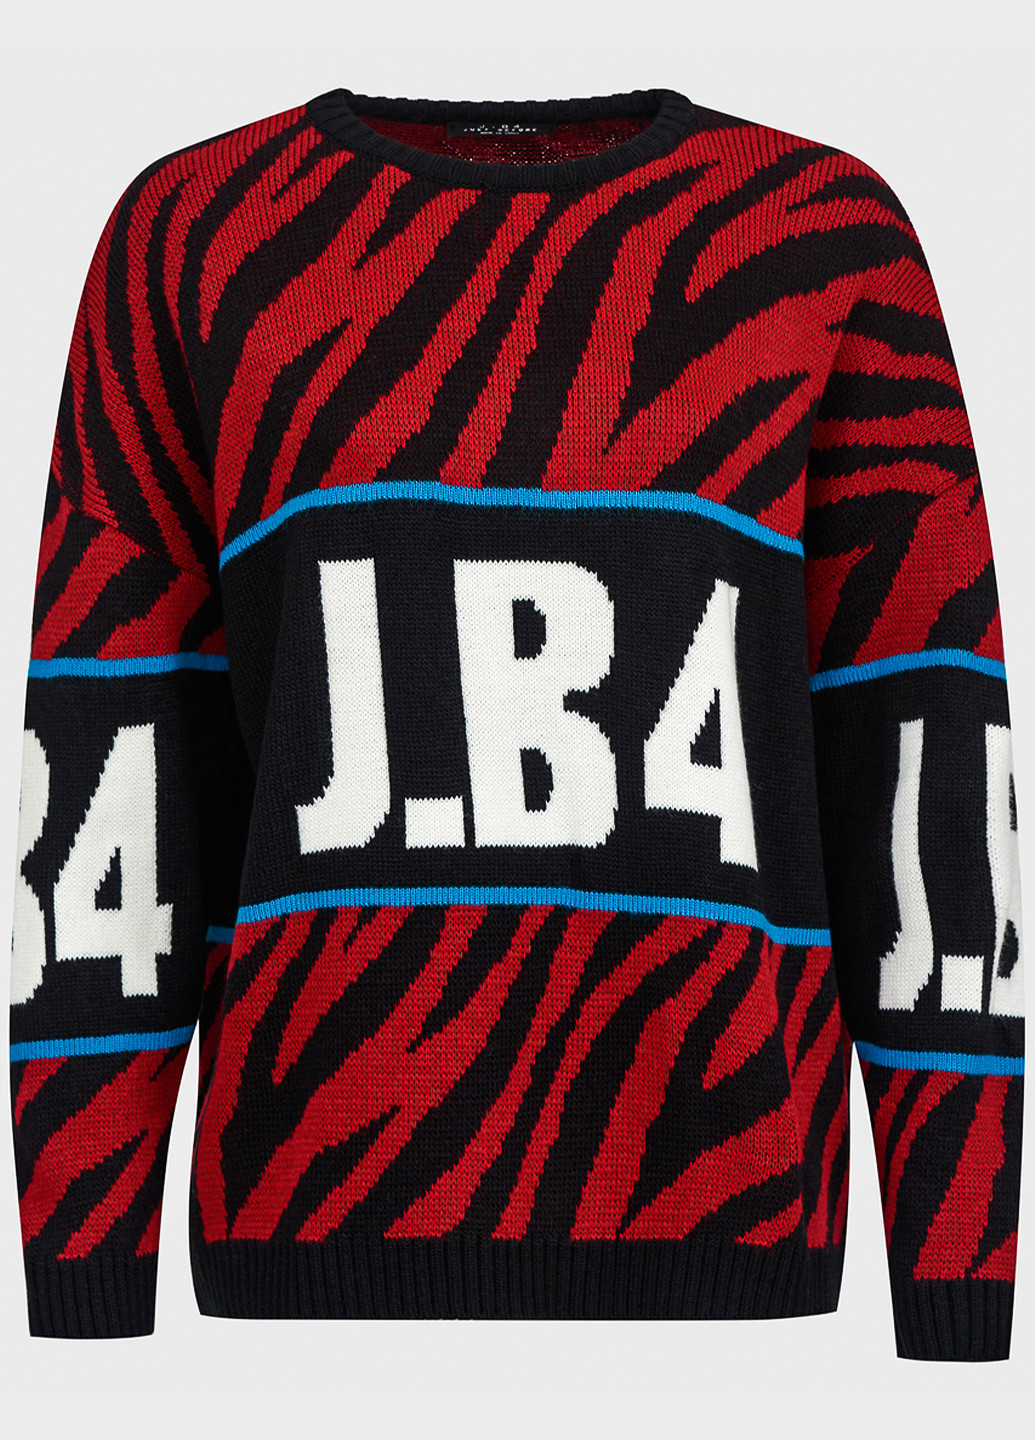 Комбинированный зимний свитер J.B4 (Just Before)